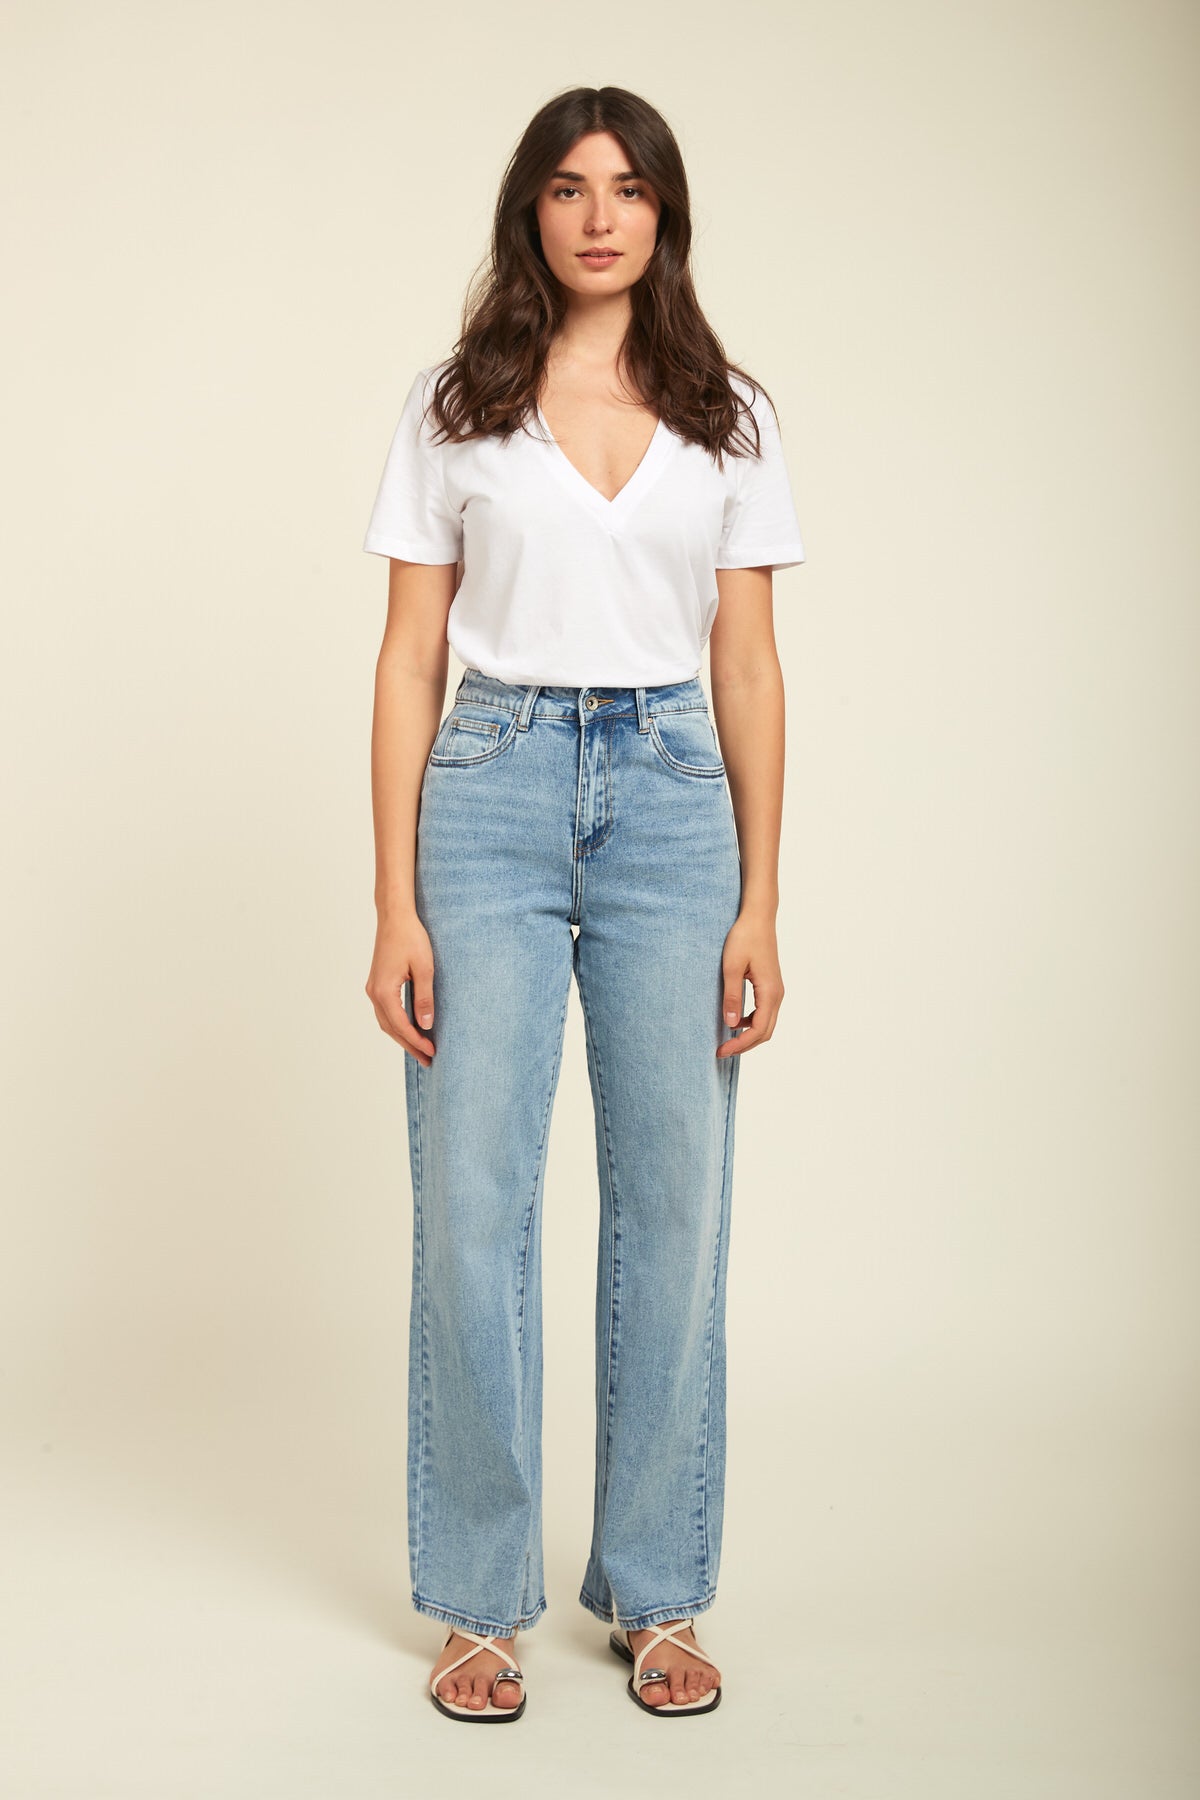 Grote snij -off jeans - Perrine